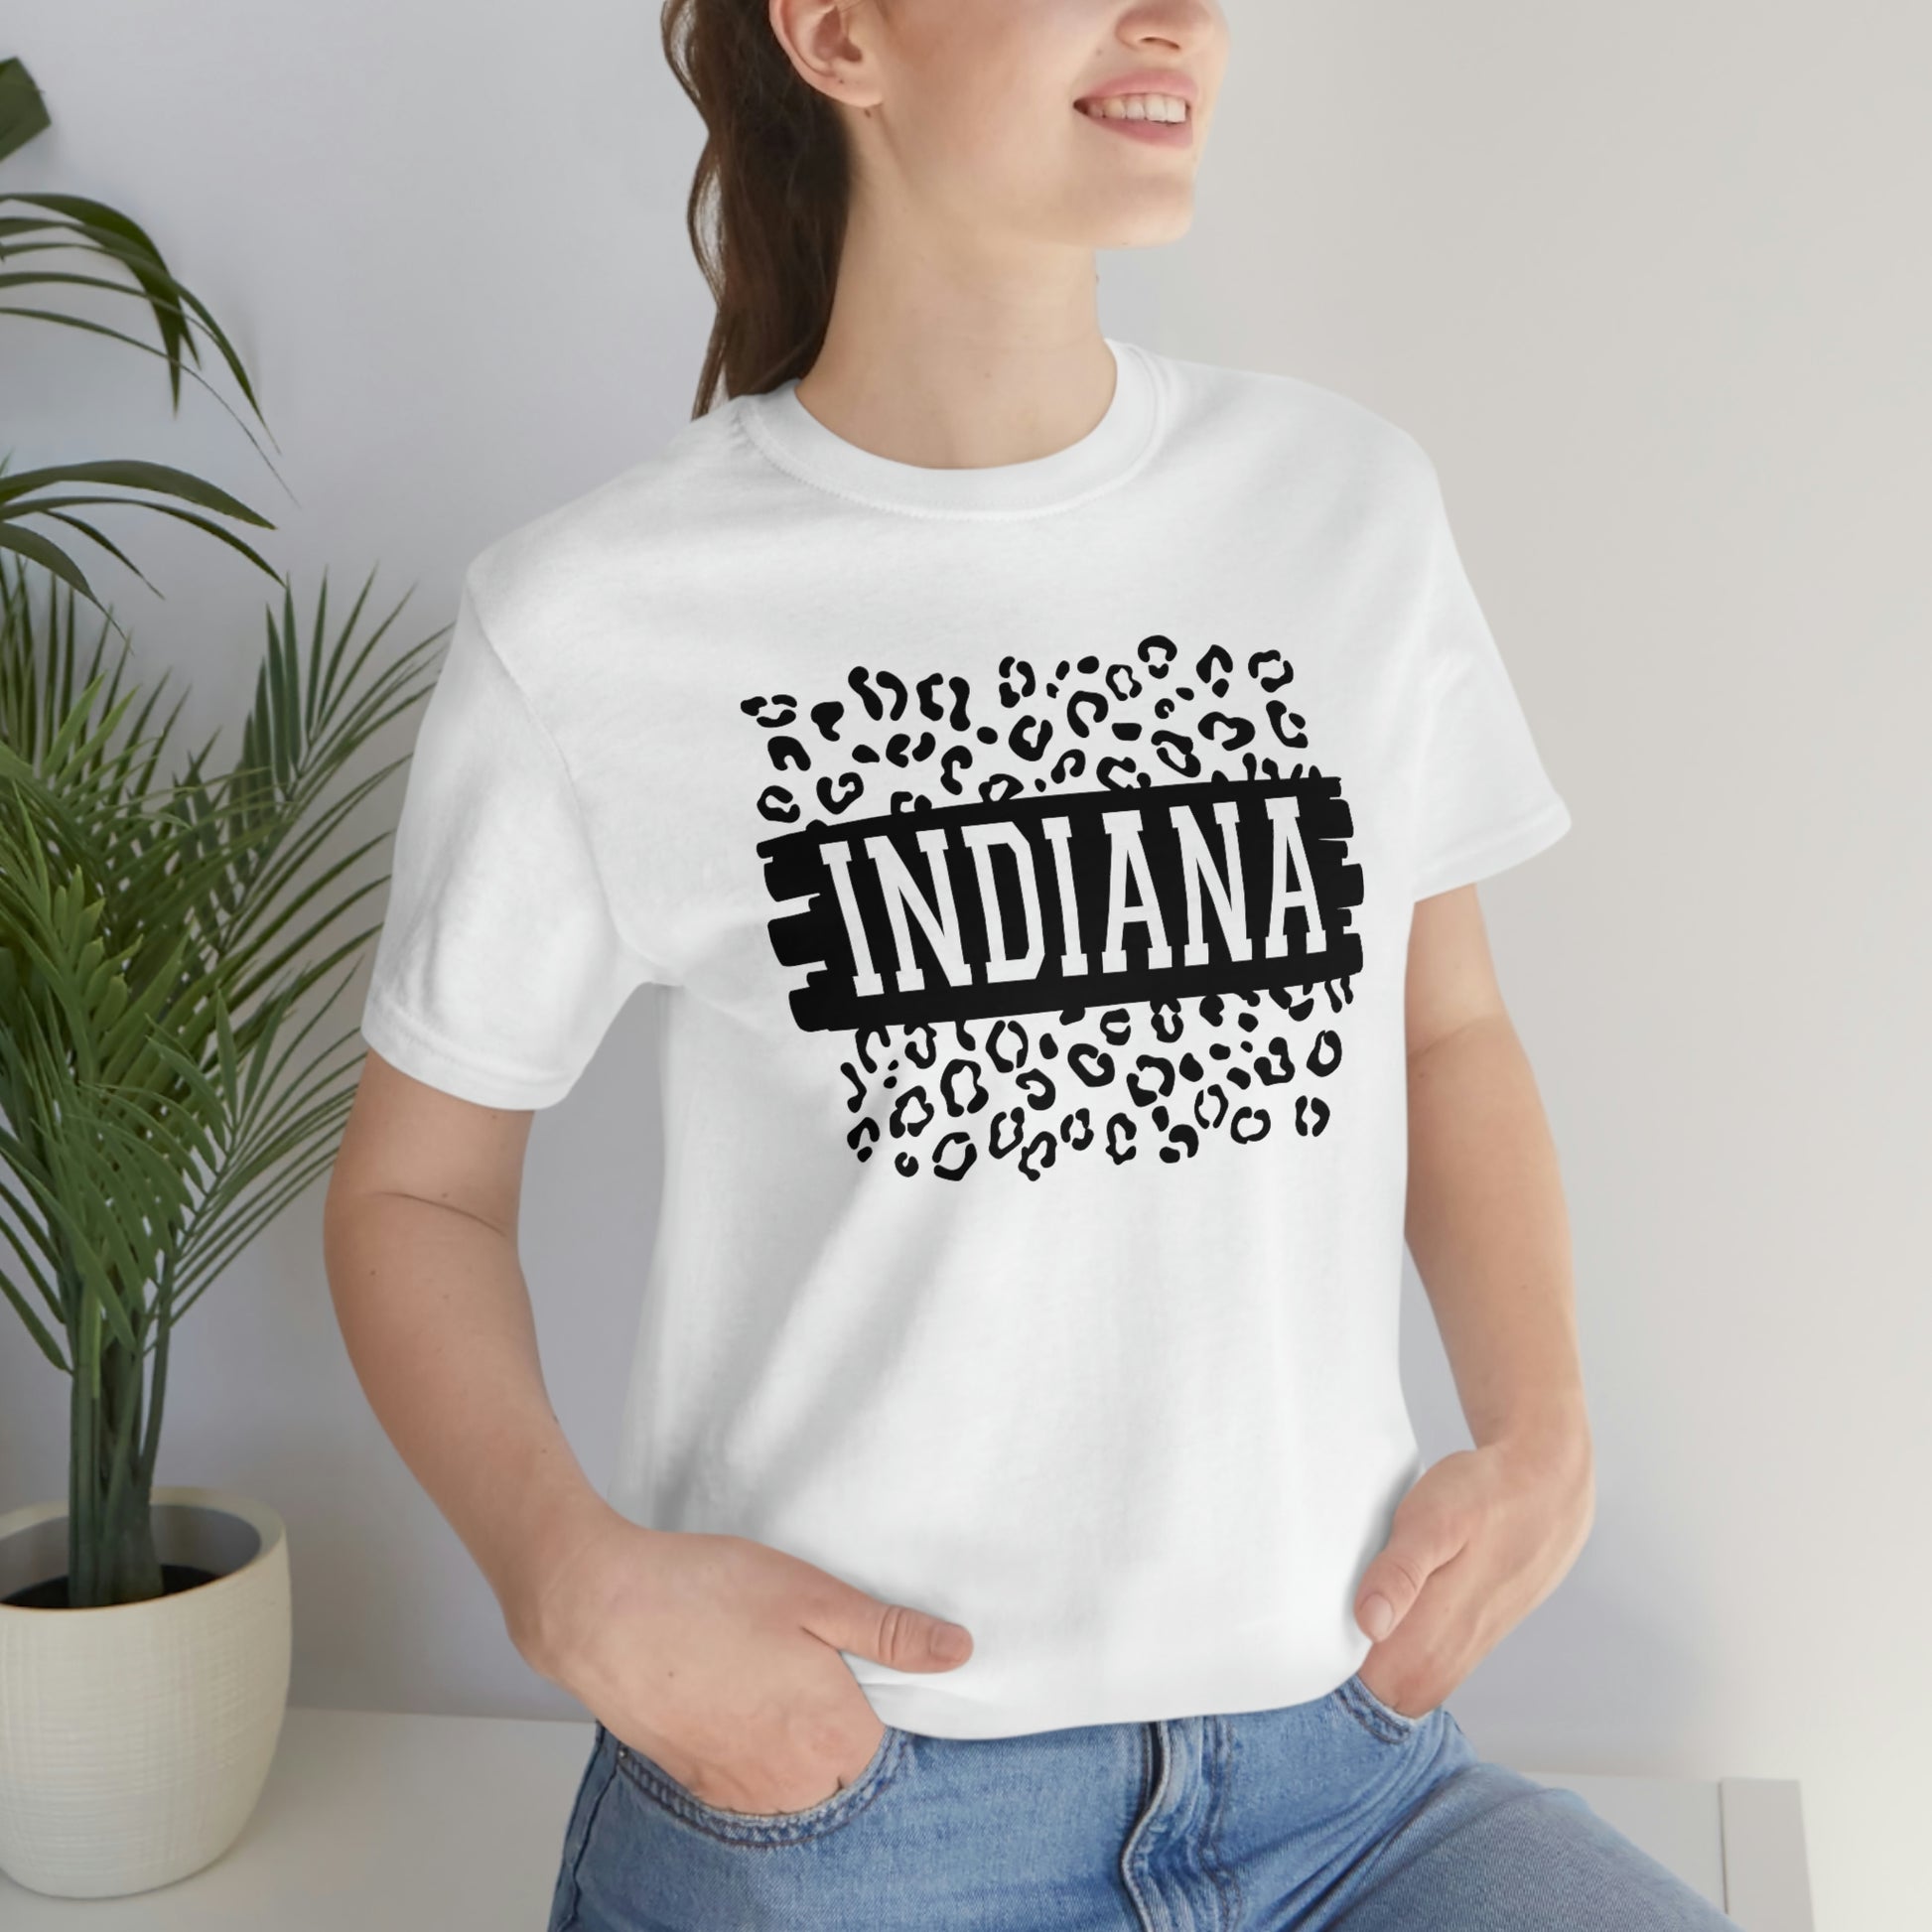 Indiana Leopard Print Short Sleeve T-shirt